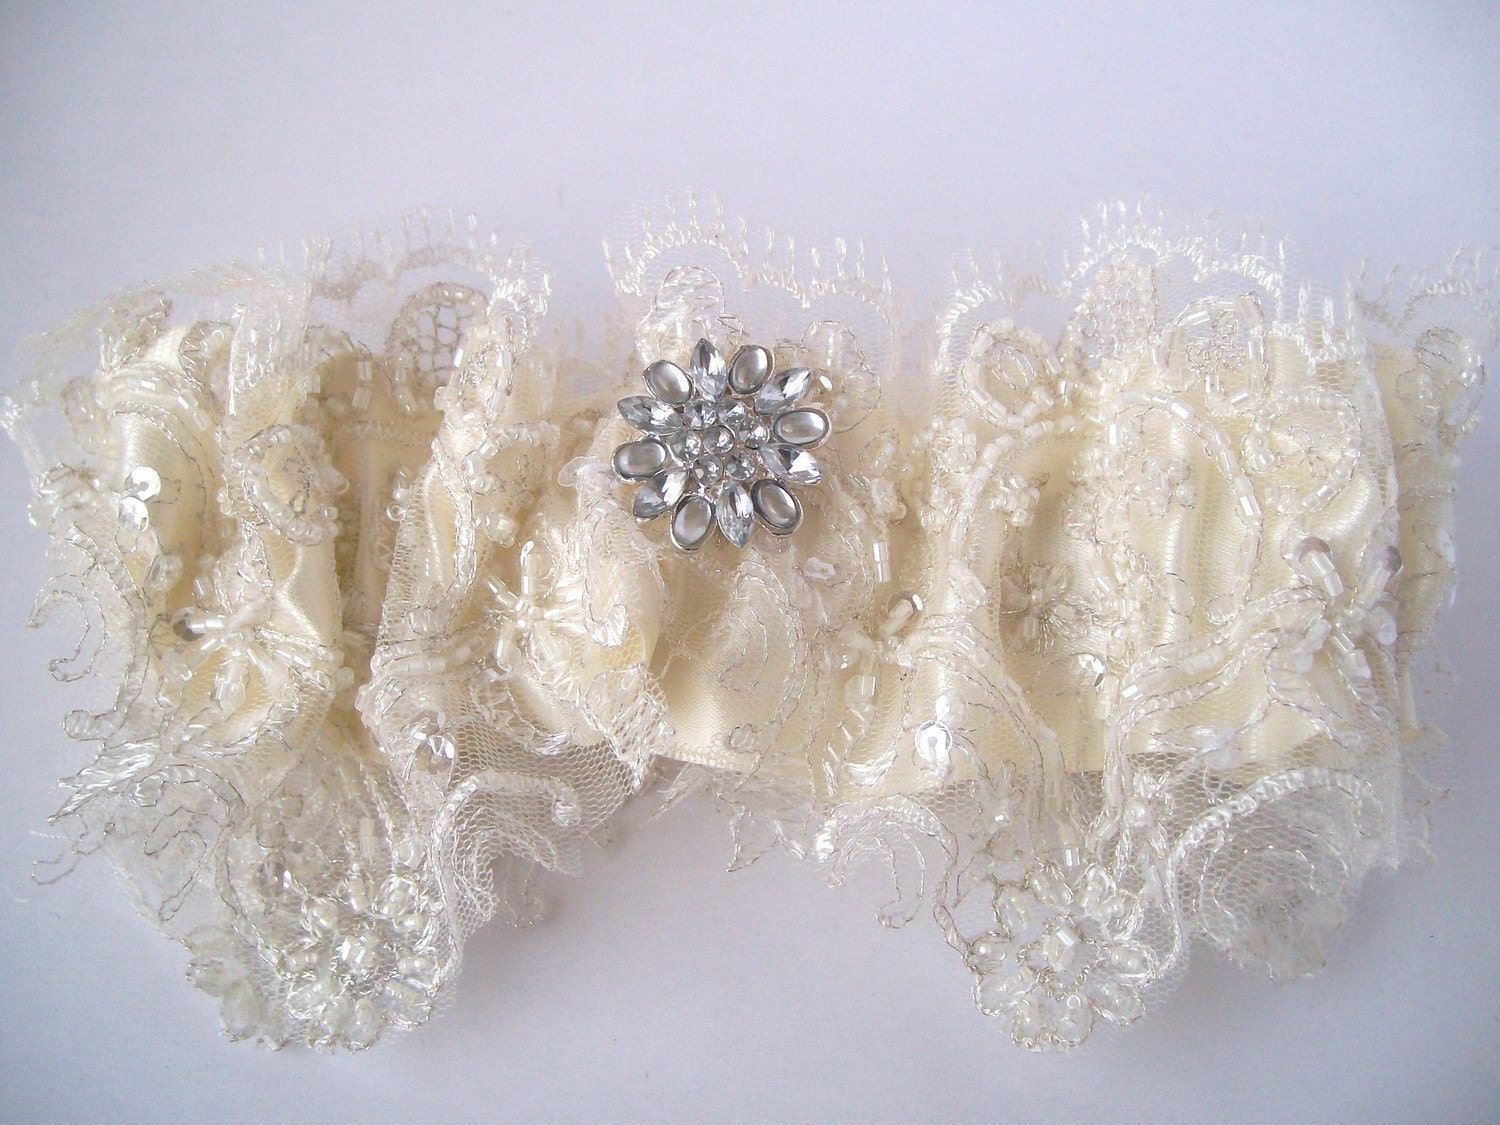 Ivory Bridal Garter Vintage Style Lace Garter Set with Beads